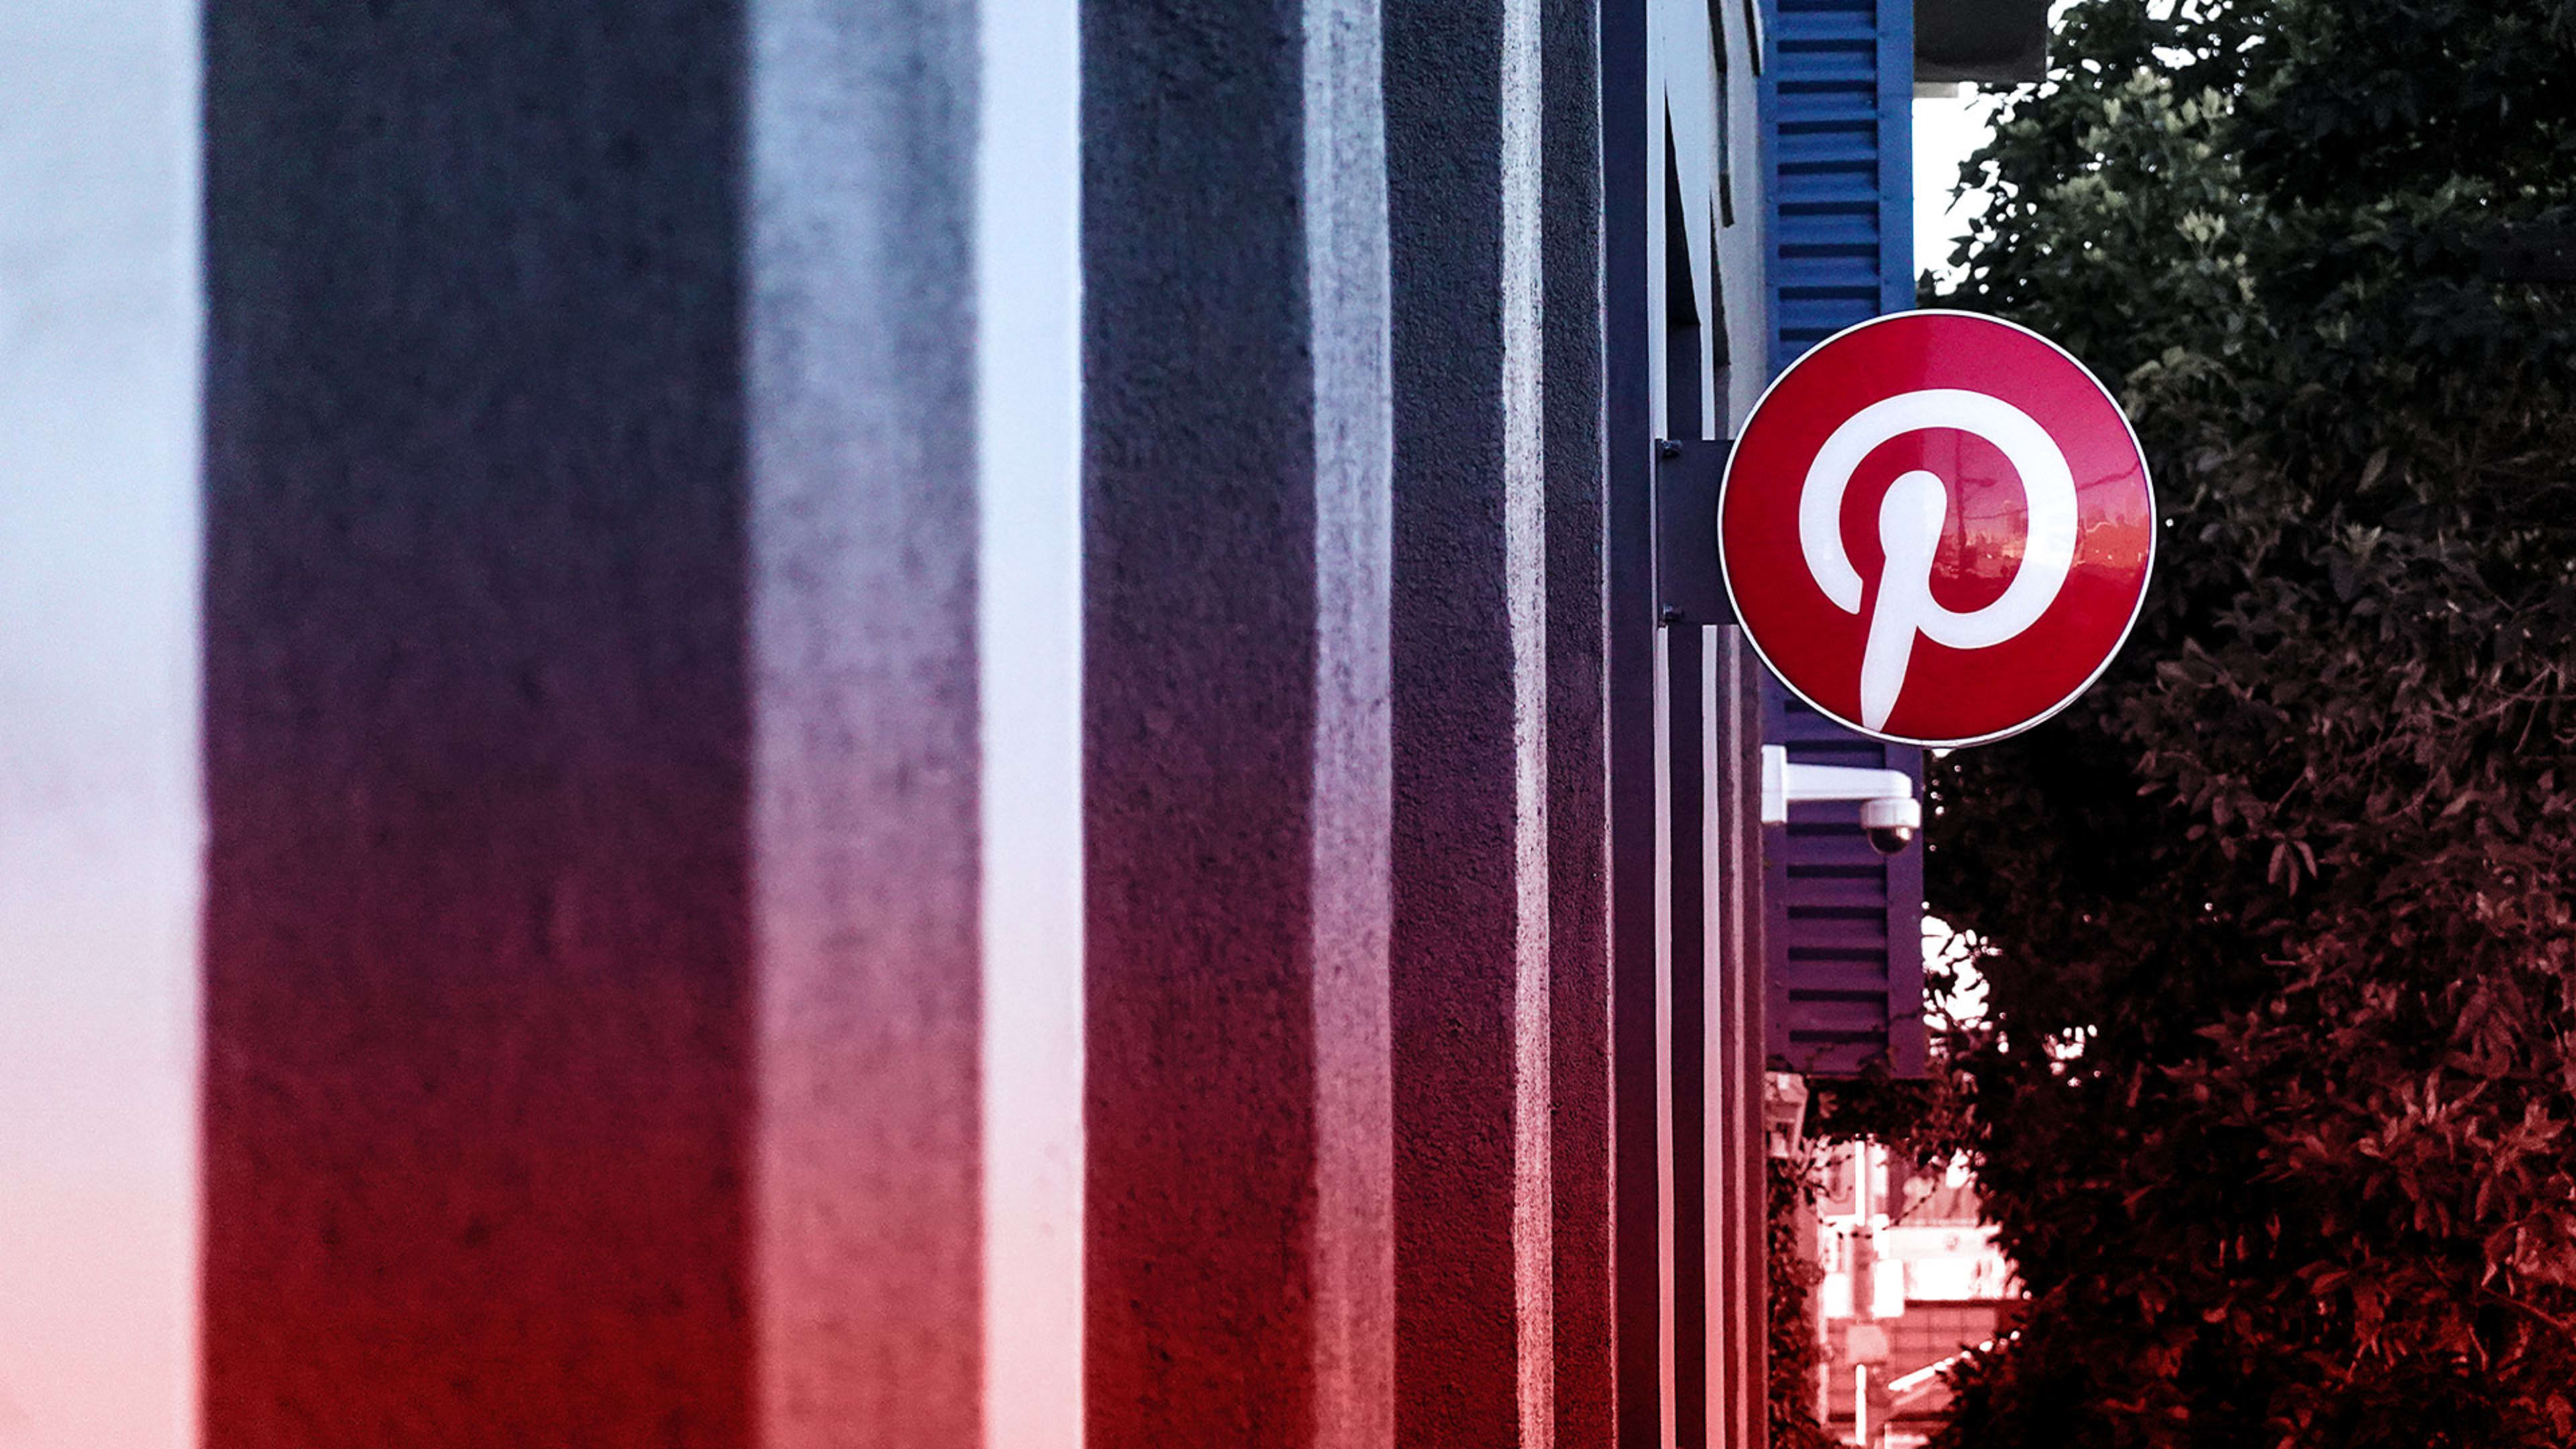 Pinterest stock price: PINS soars as digital advertising market rebounds for tech platforms